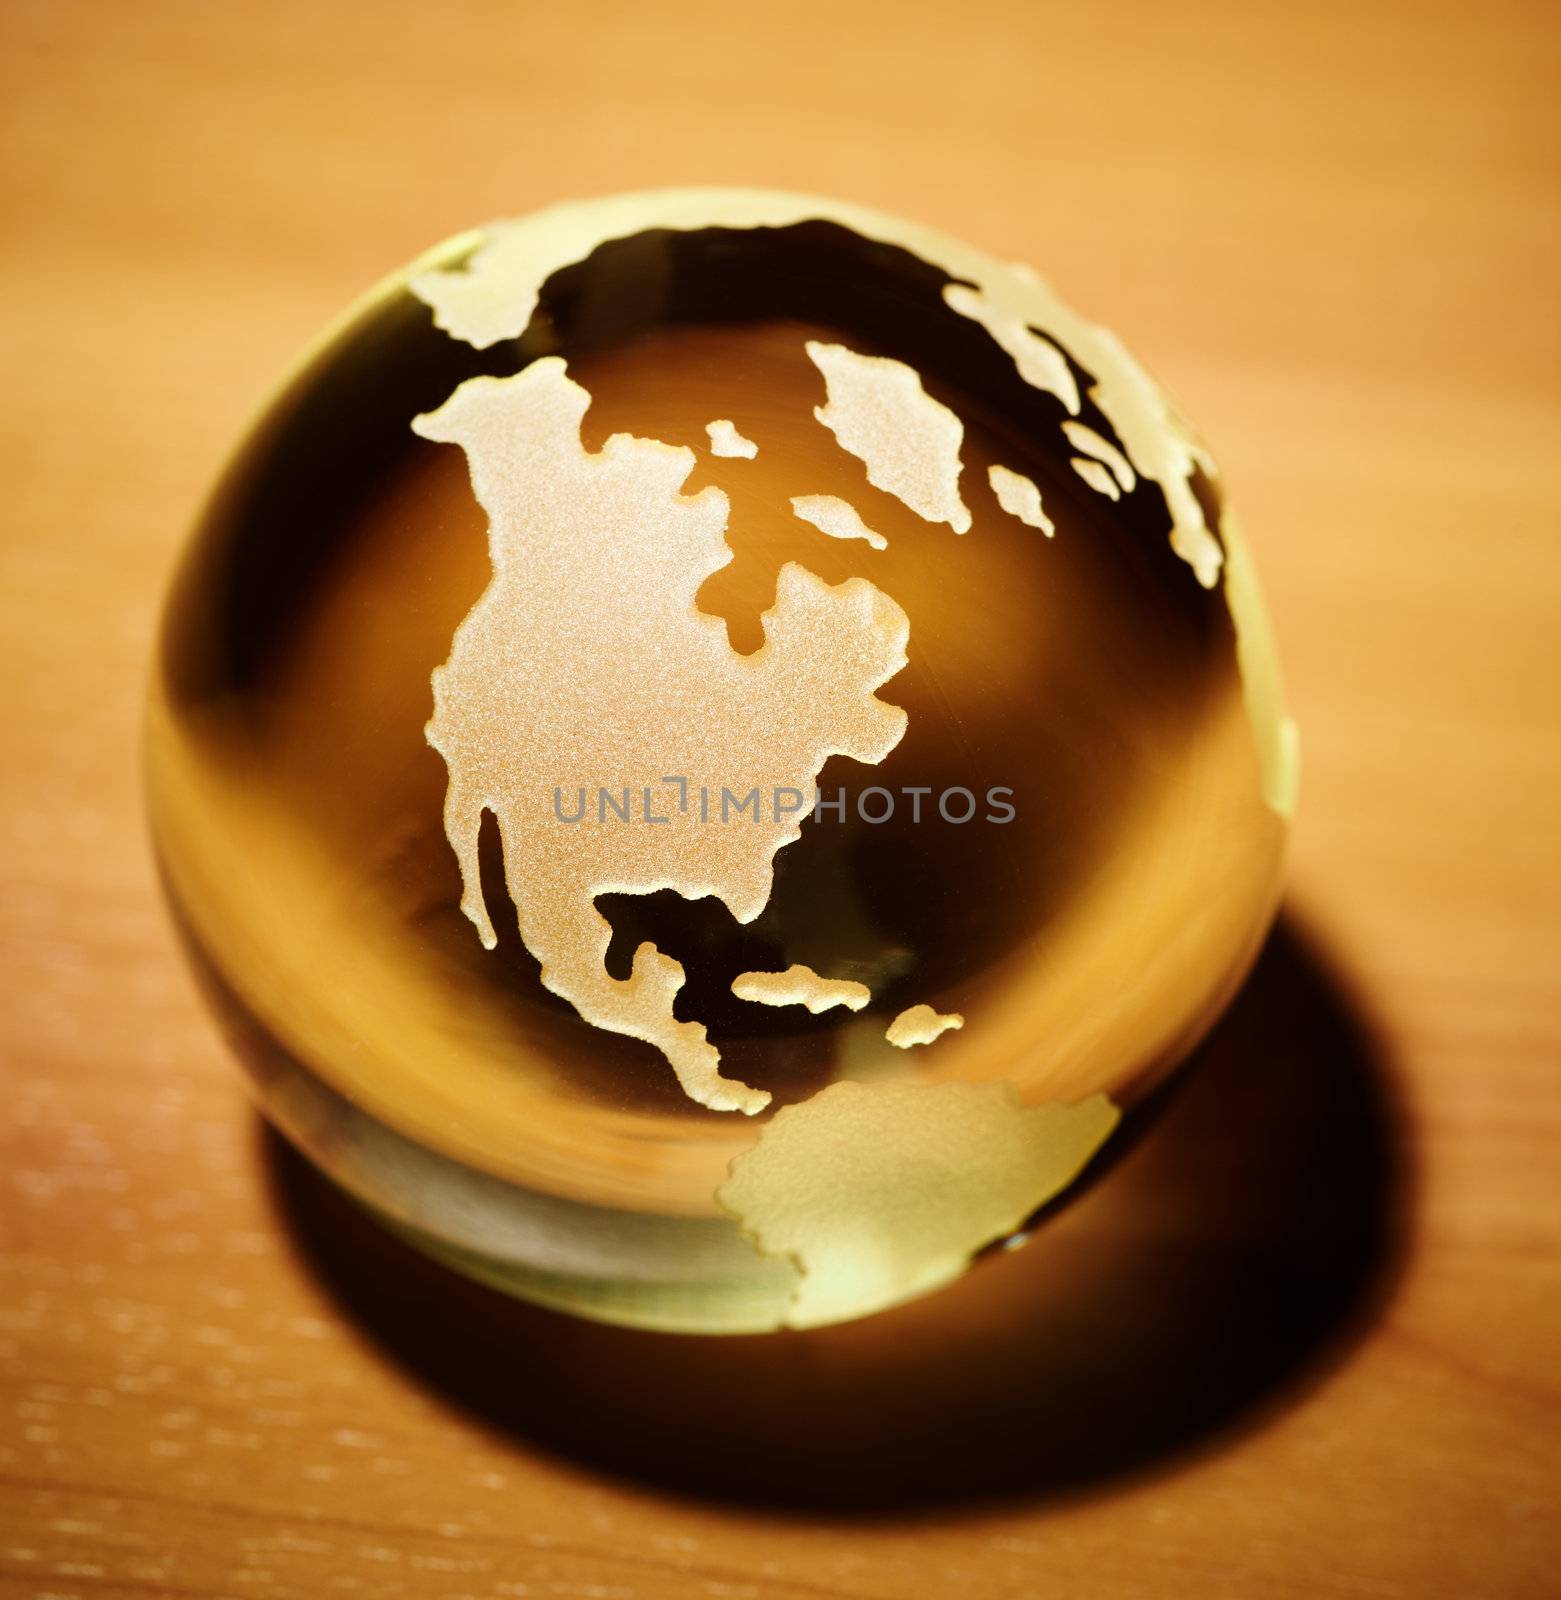 The globe by Kuzma